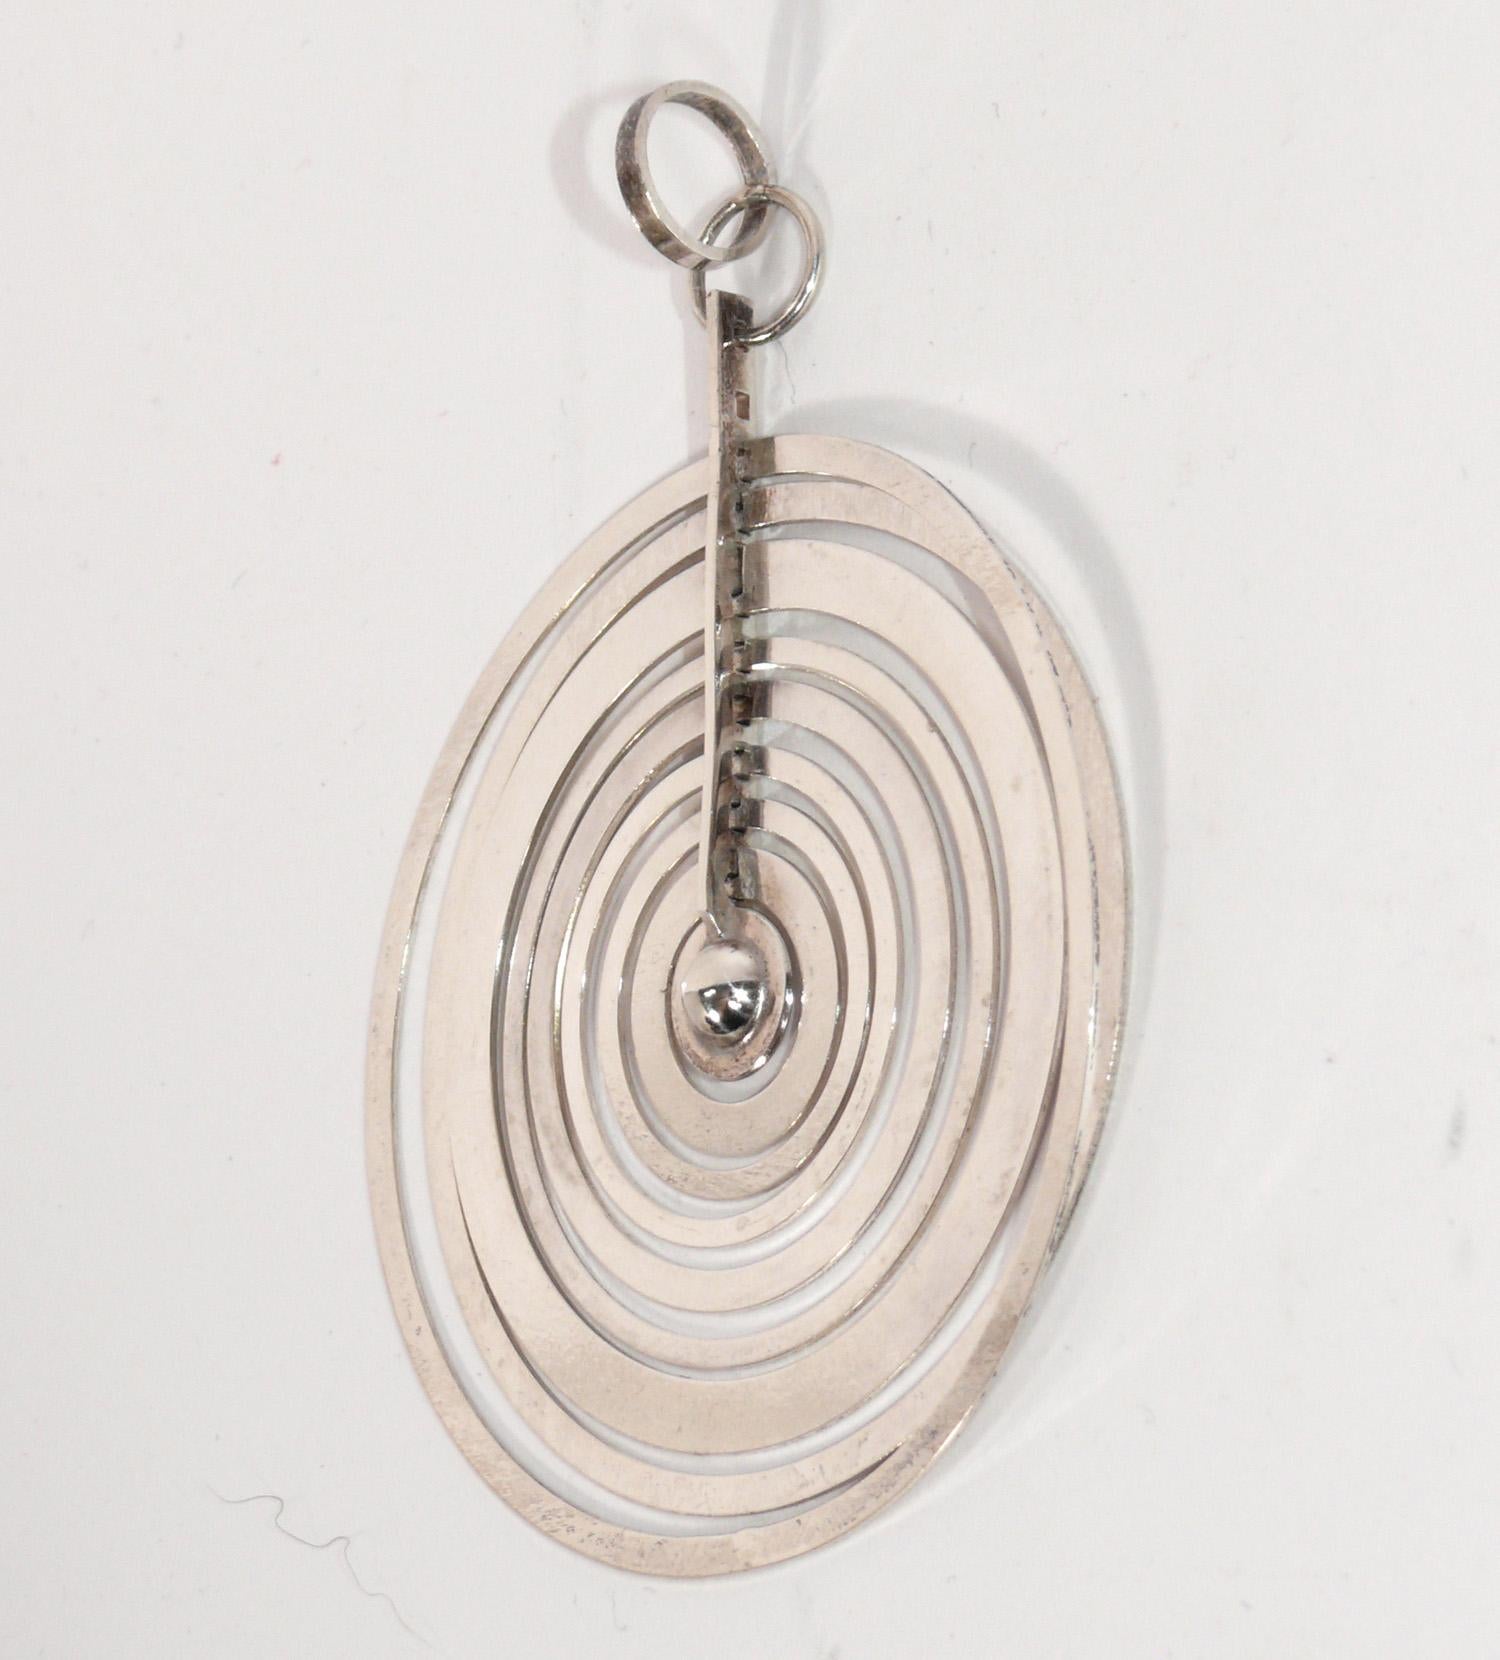 Modernist Hopeakuu (Silver Moon) Sterling Silver Pendant, designed by Tapio Wirkkala for N. Westerback Jewelers, Finland, circa 1970s. Measurements: 3.5